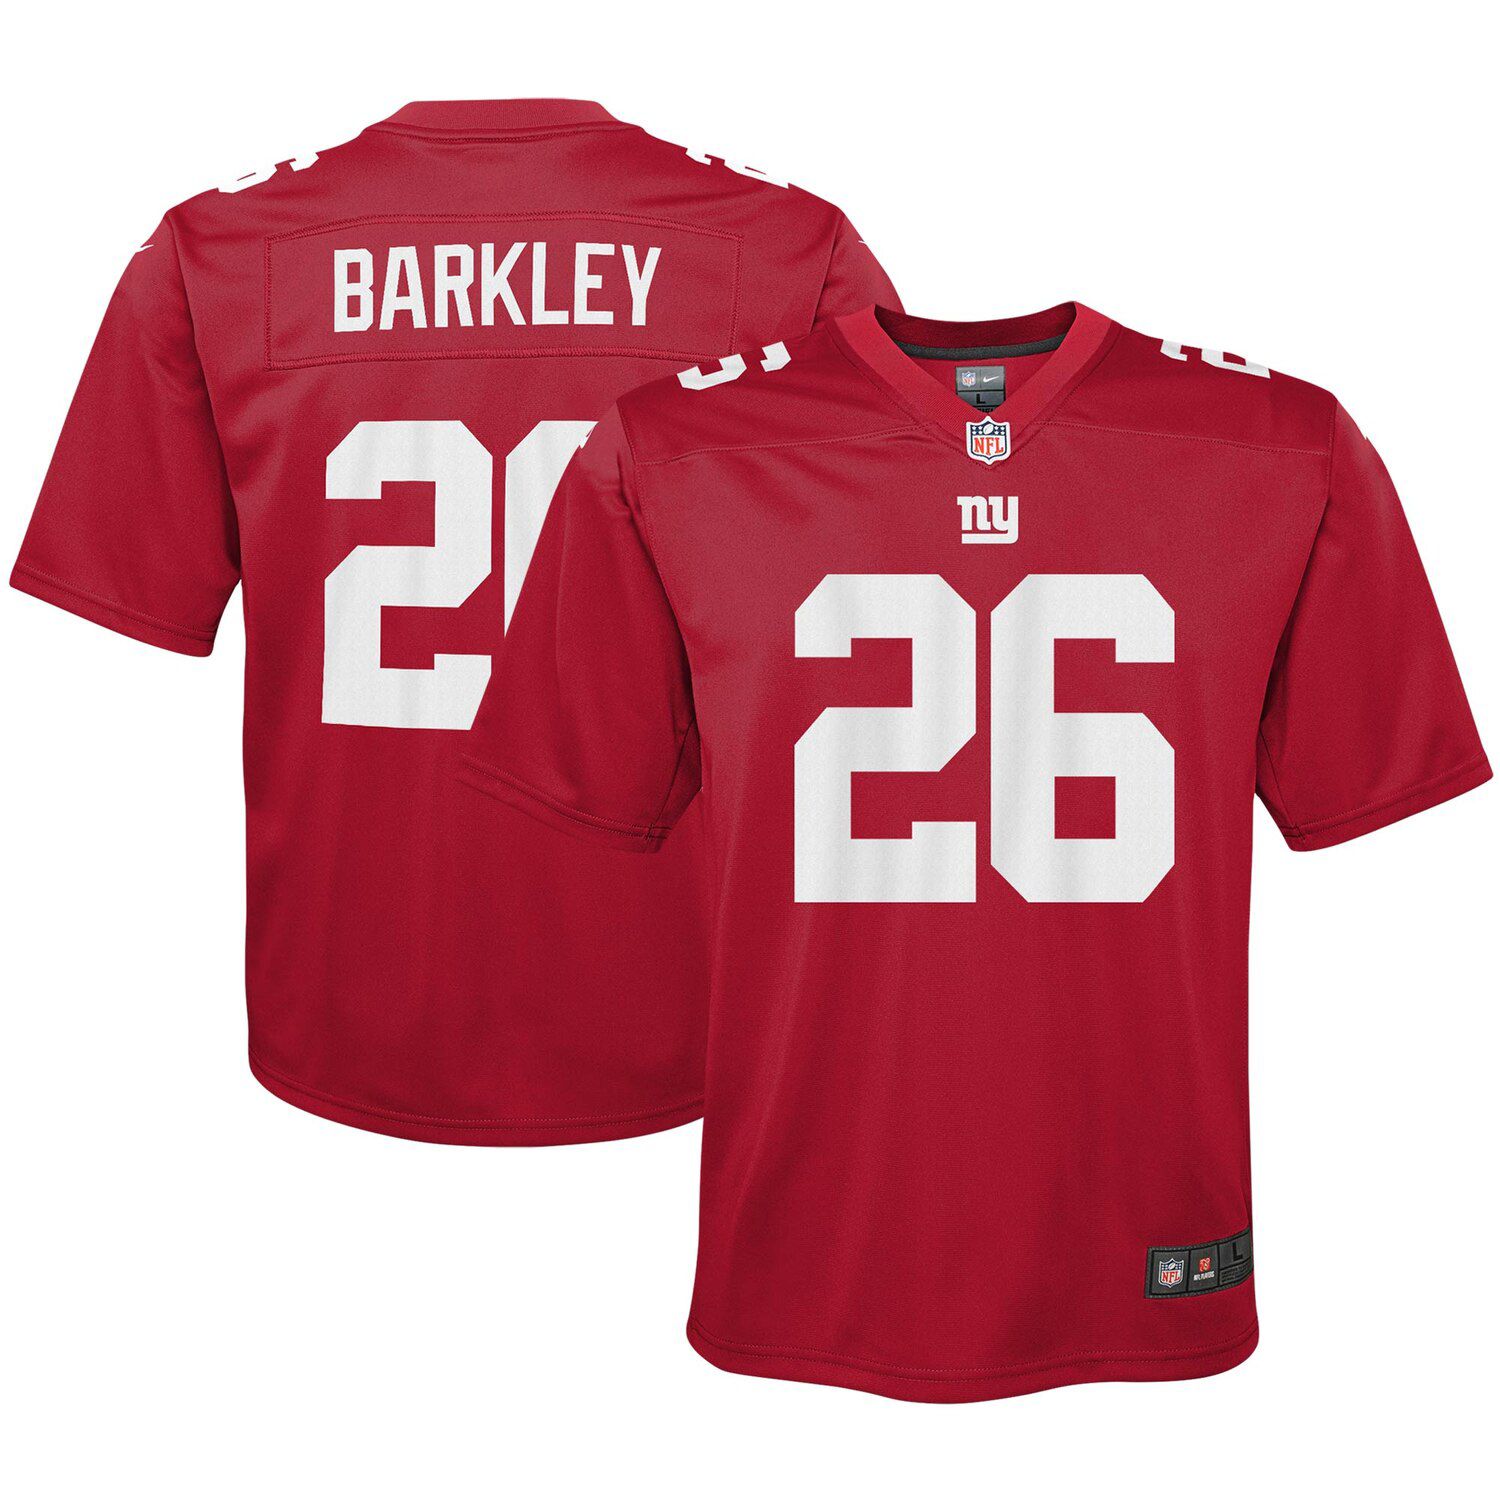 red barkley jersey